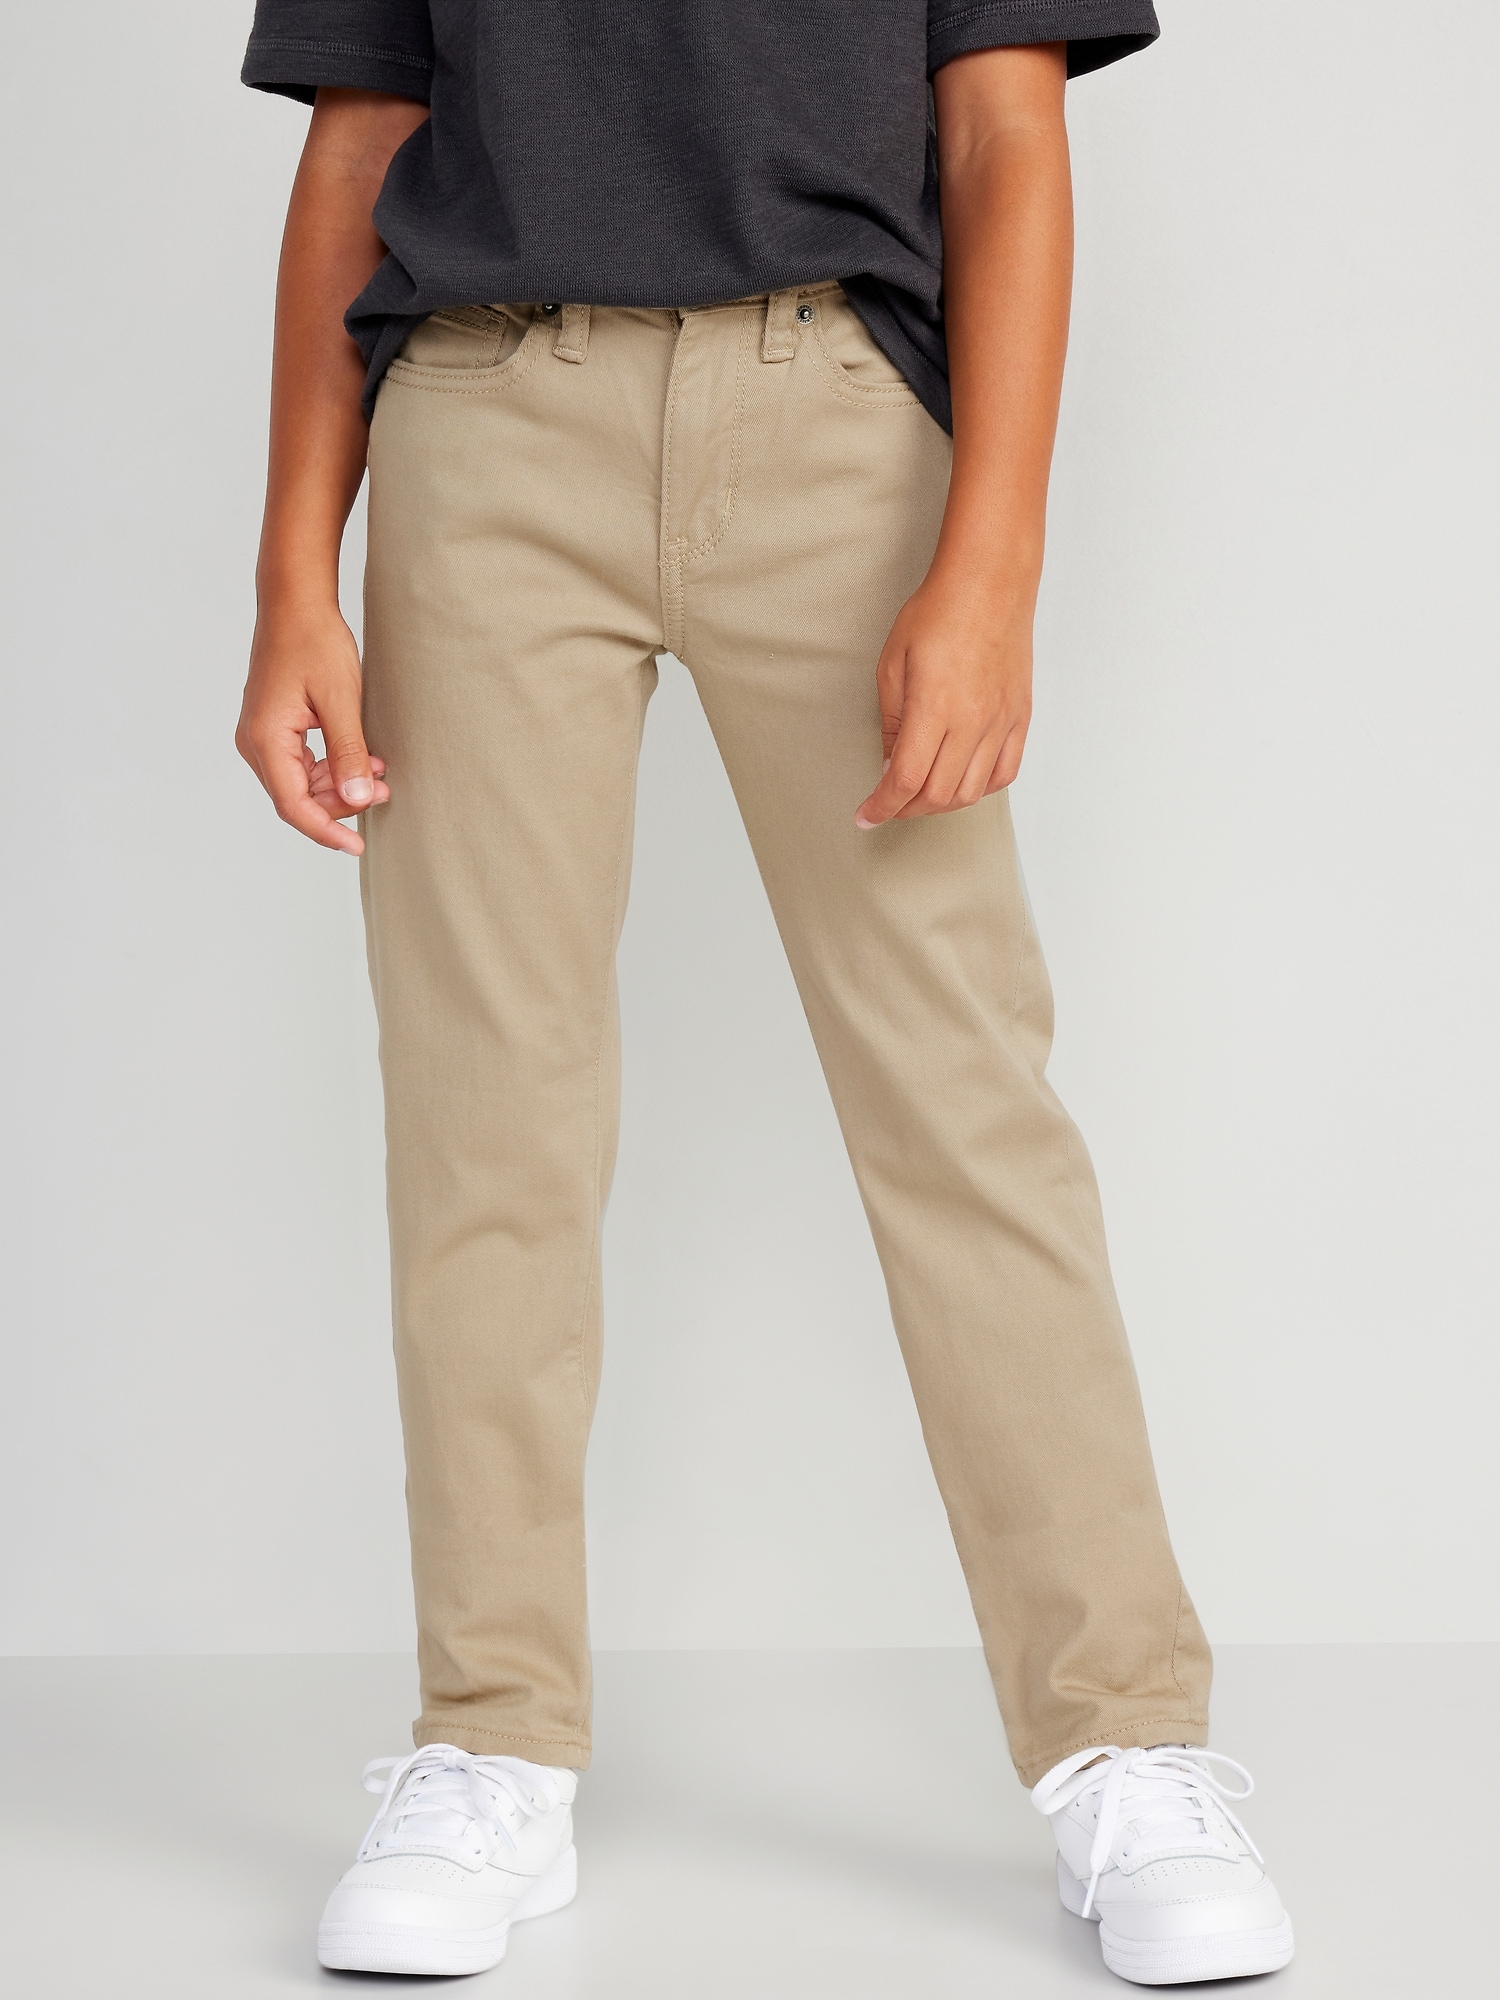 Men's Wardrobe Essential: 5-Pocket Twill Pants